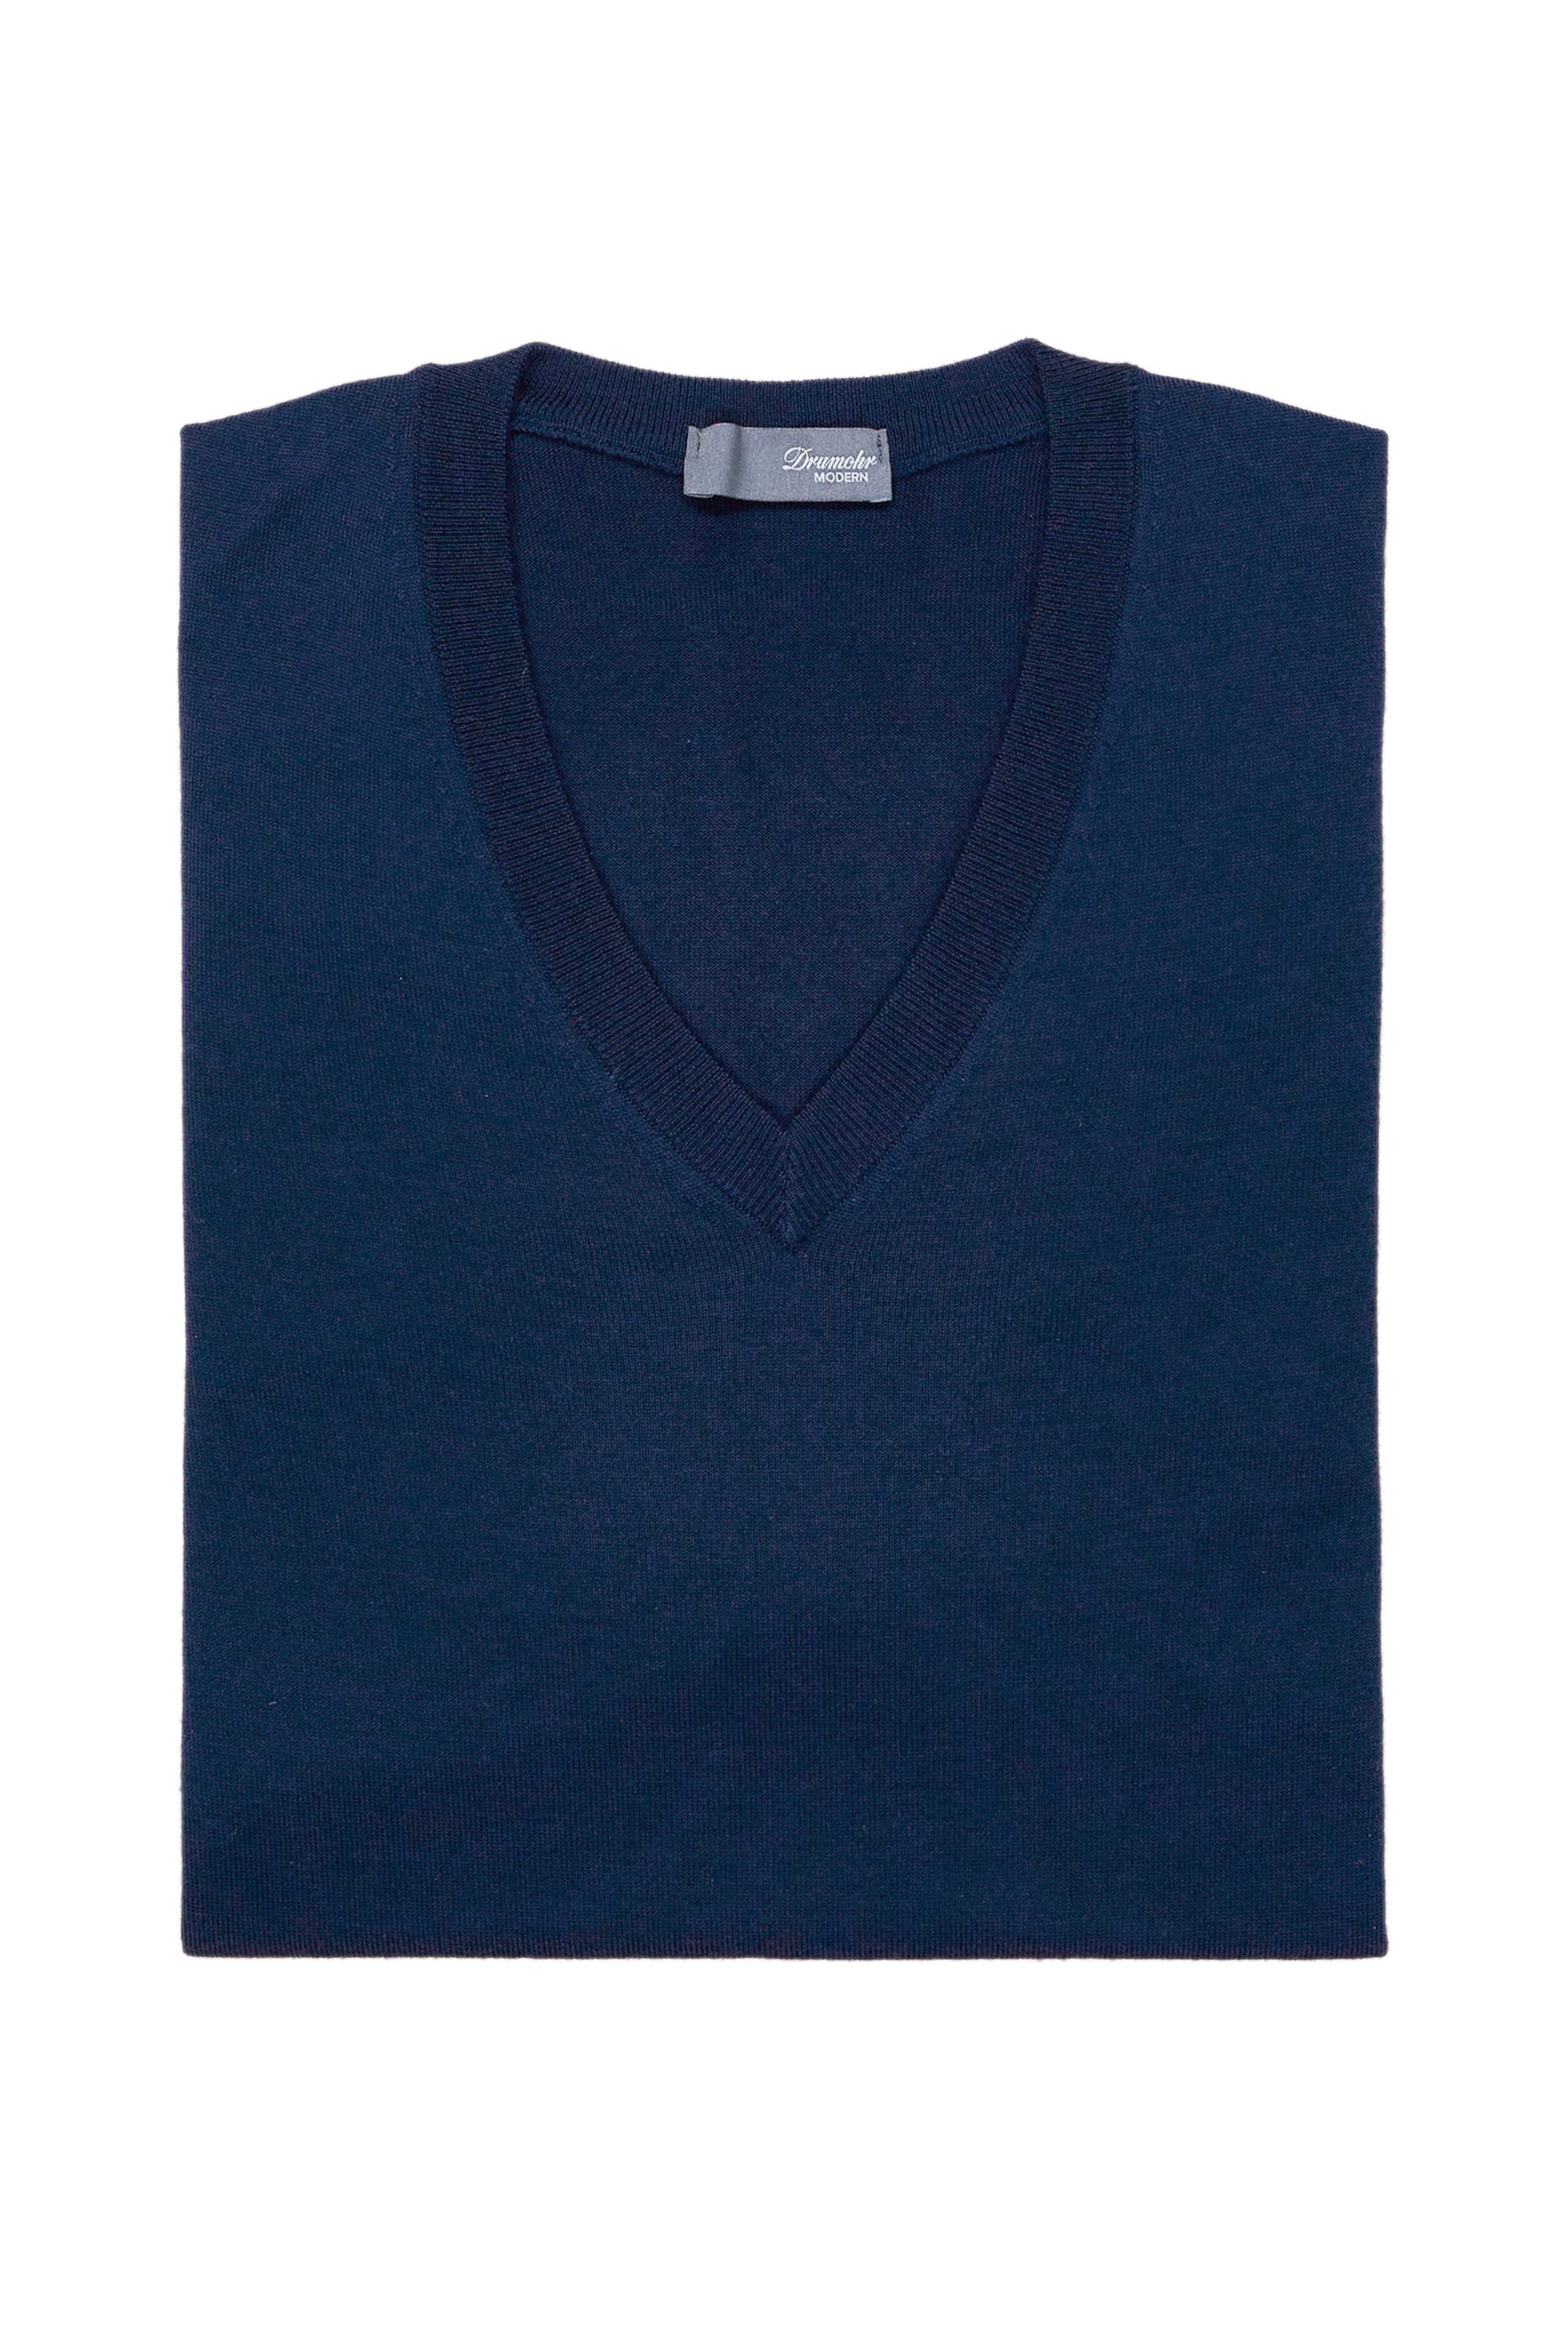 Drumohr Blue Navy Extra Fine Merino Wool V-neck Sweater